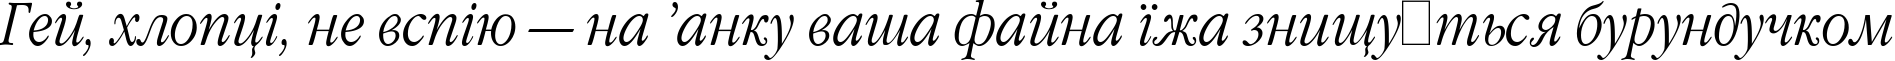 Пример написания шрифтом Garamond Narrow Italic:1 Oct 1991 текста на украинском